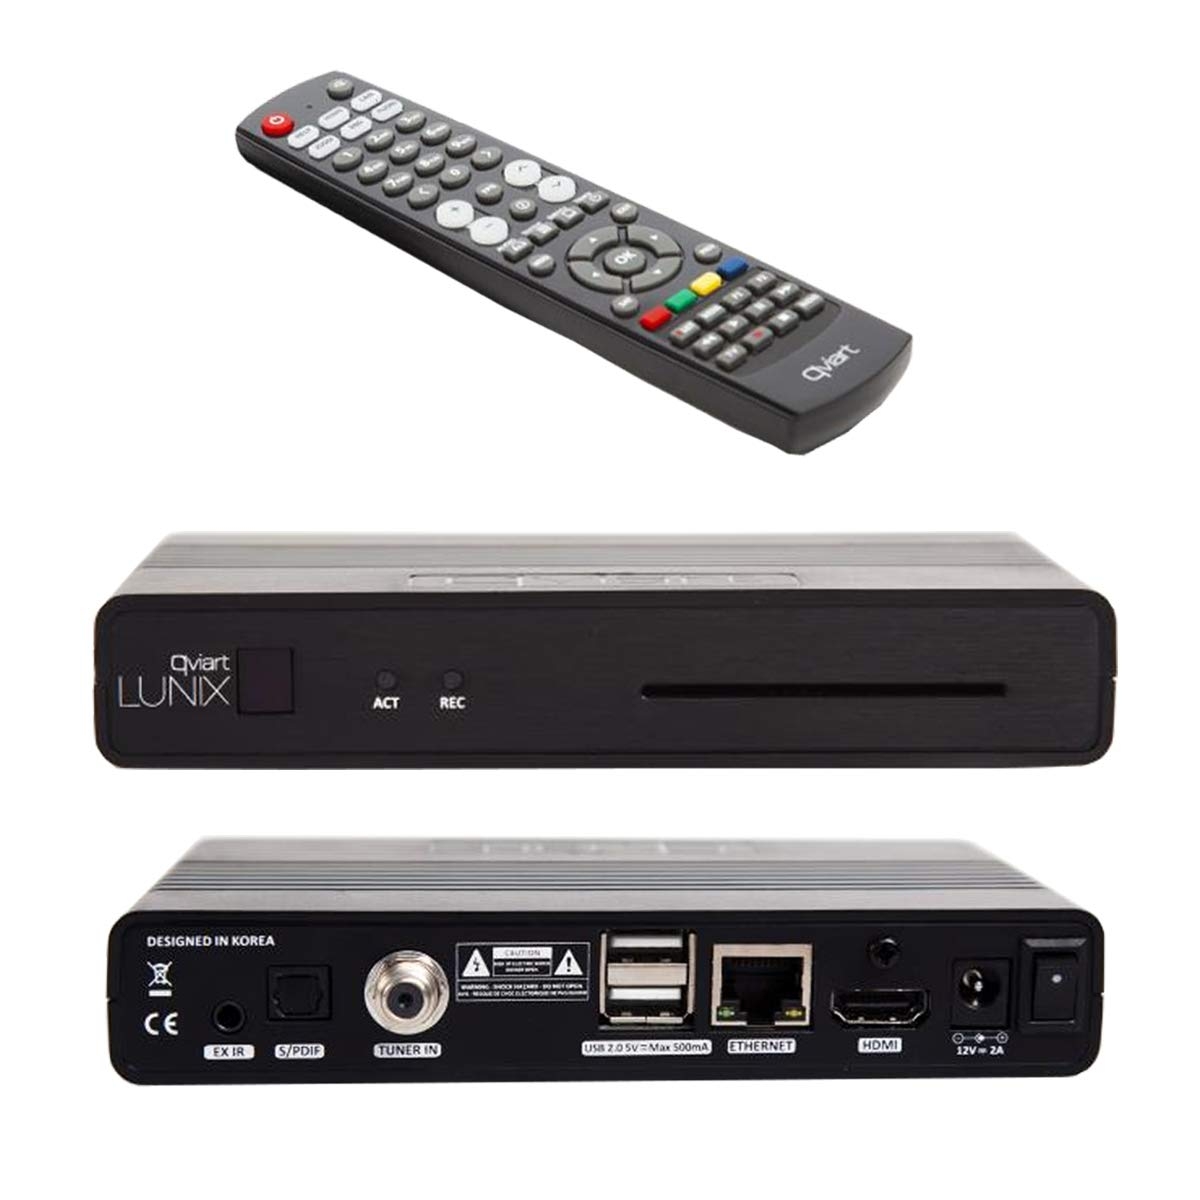 qviart Lunix HbbTV Full HD H265 HEVC OTT IPTV E2 Linux Sat Receiver